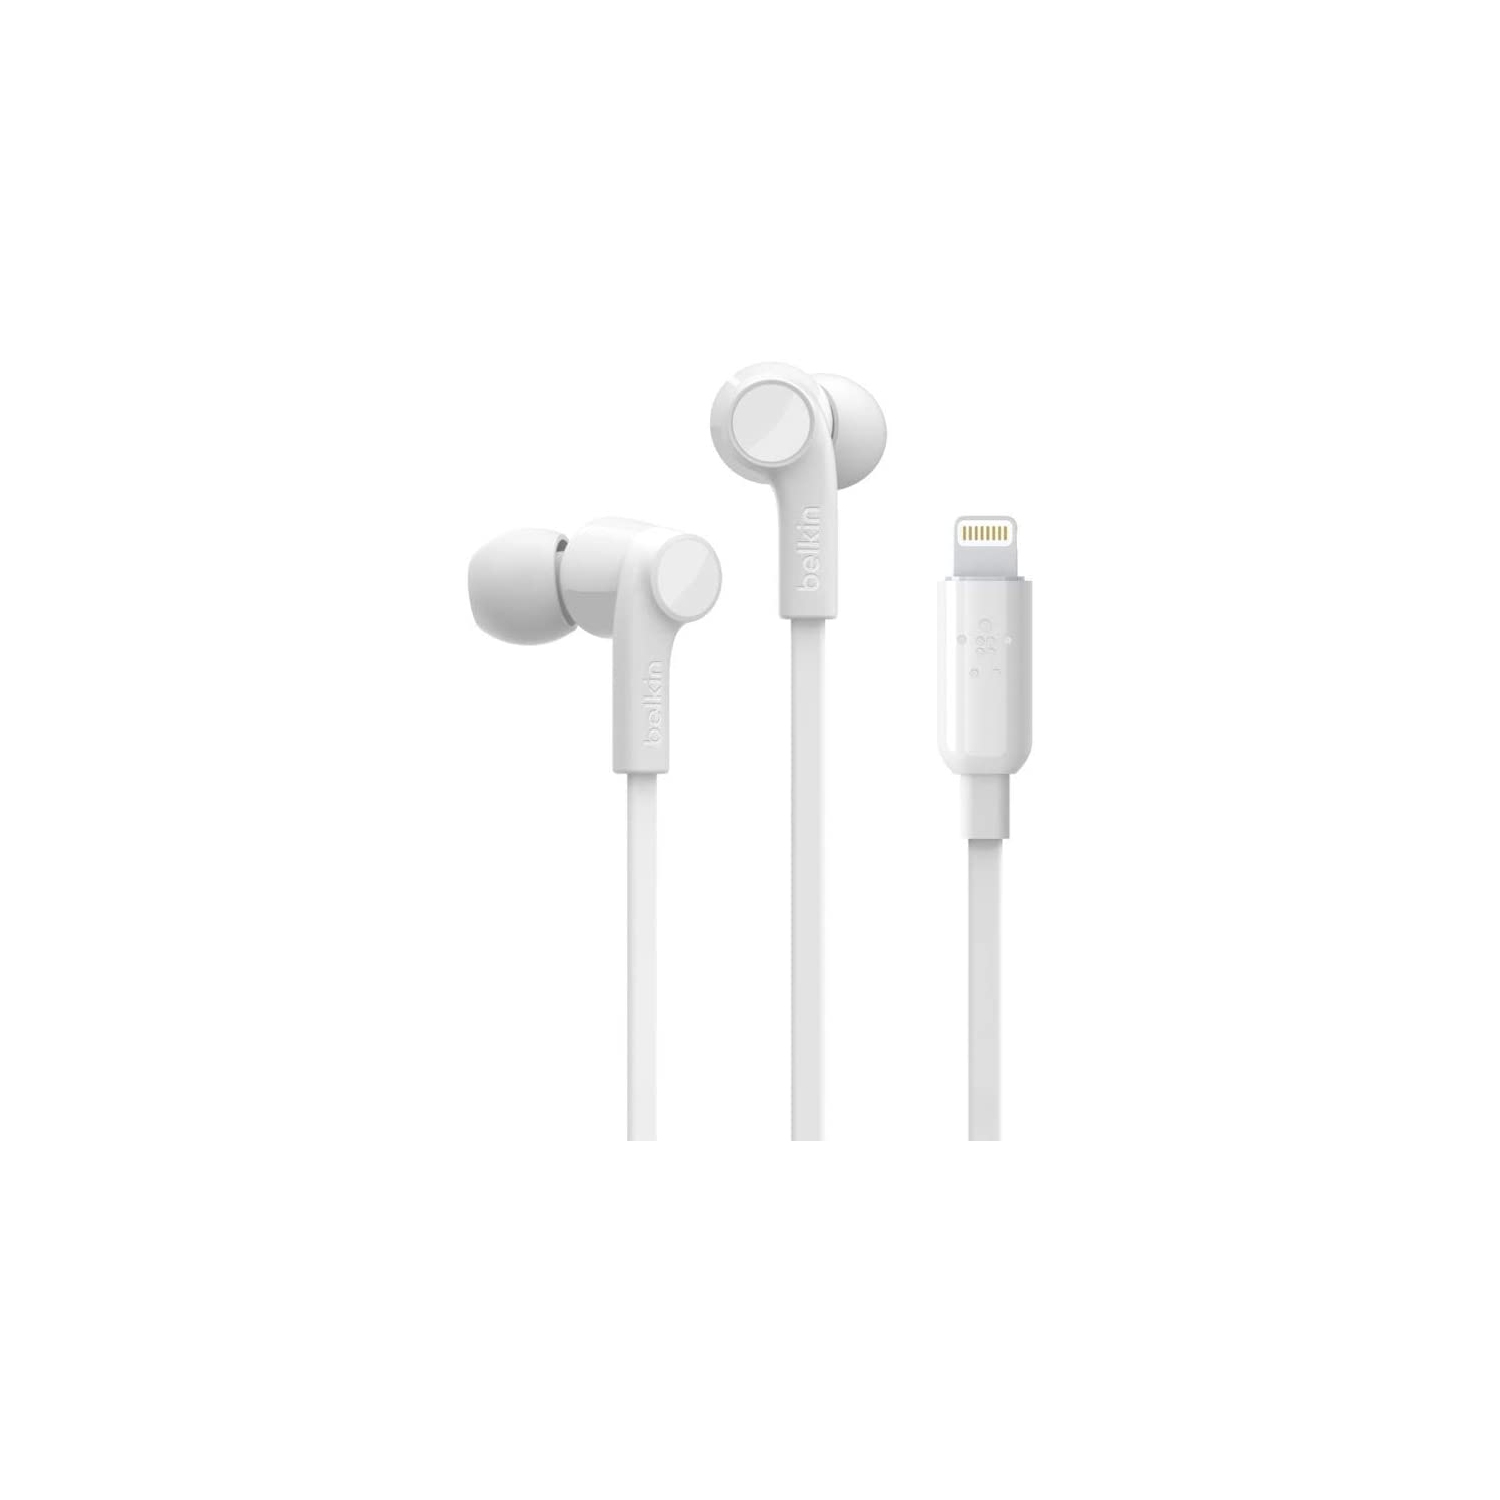 Dolaer RockStar iPhone Headphones with Lightning Connector (Lightning Headphones for iPhone, Lightning Earphones for iPhone), White